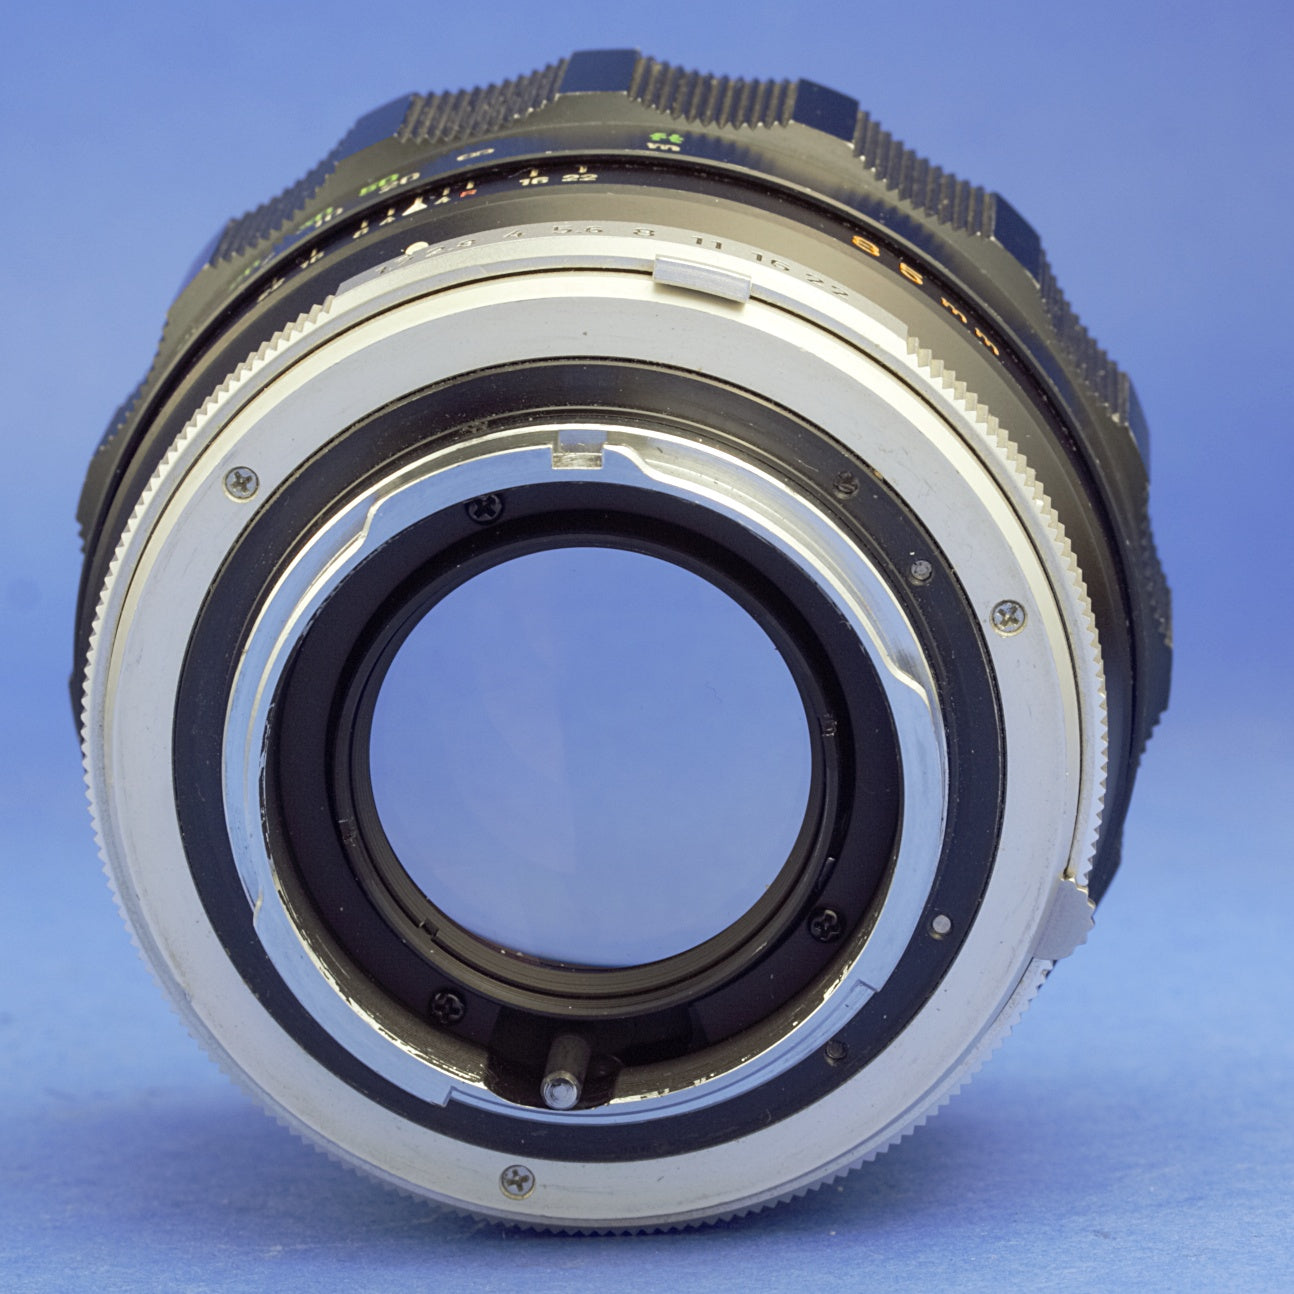 Minolta MC 85mm 1.7 Lens